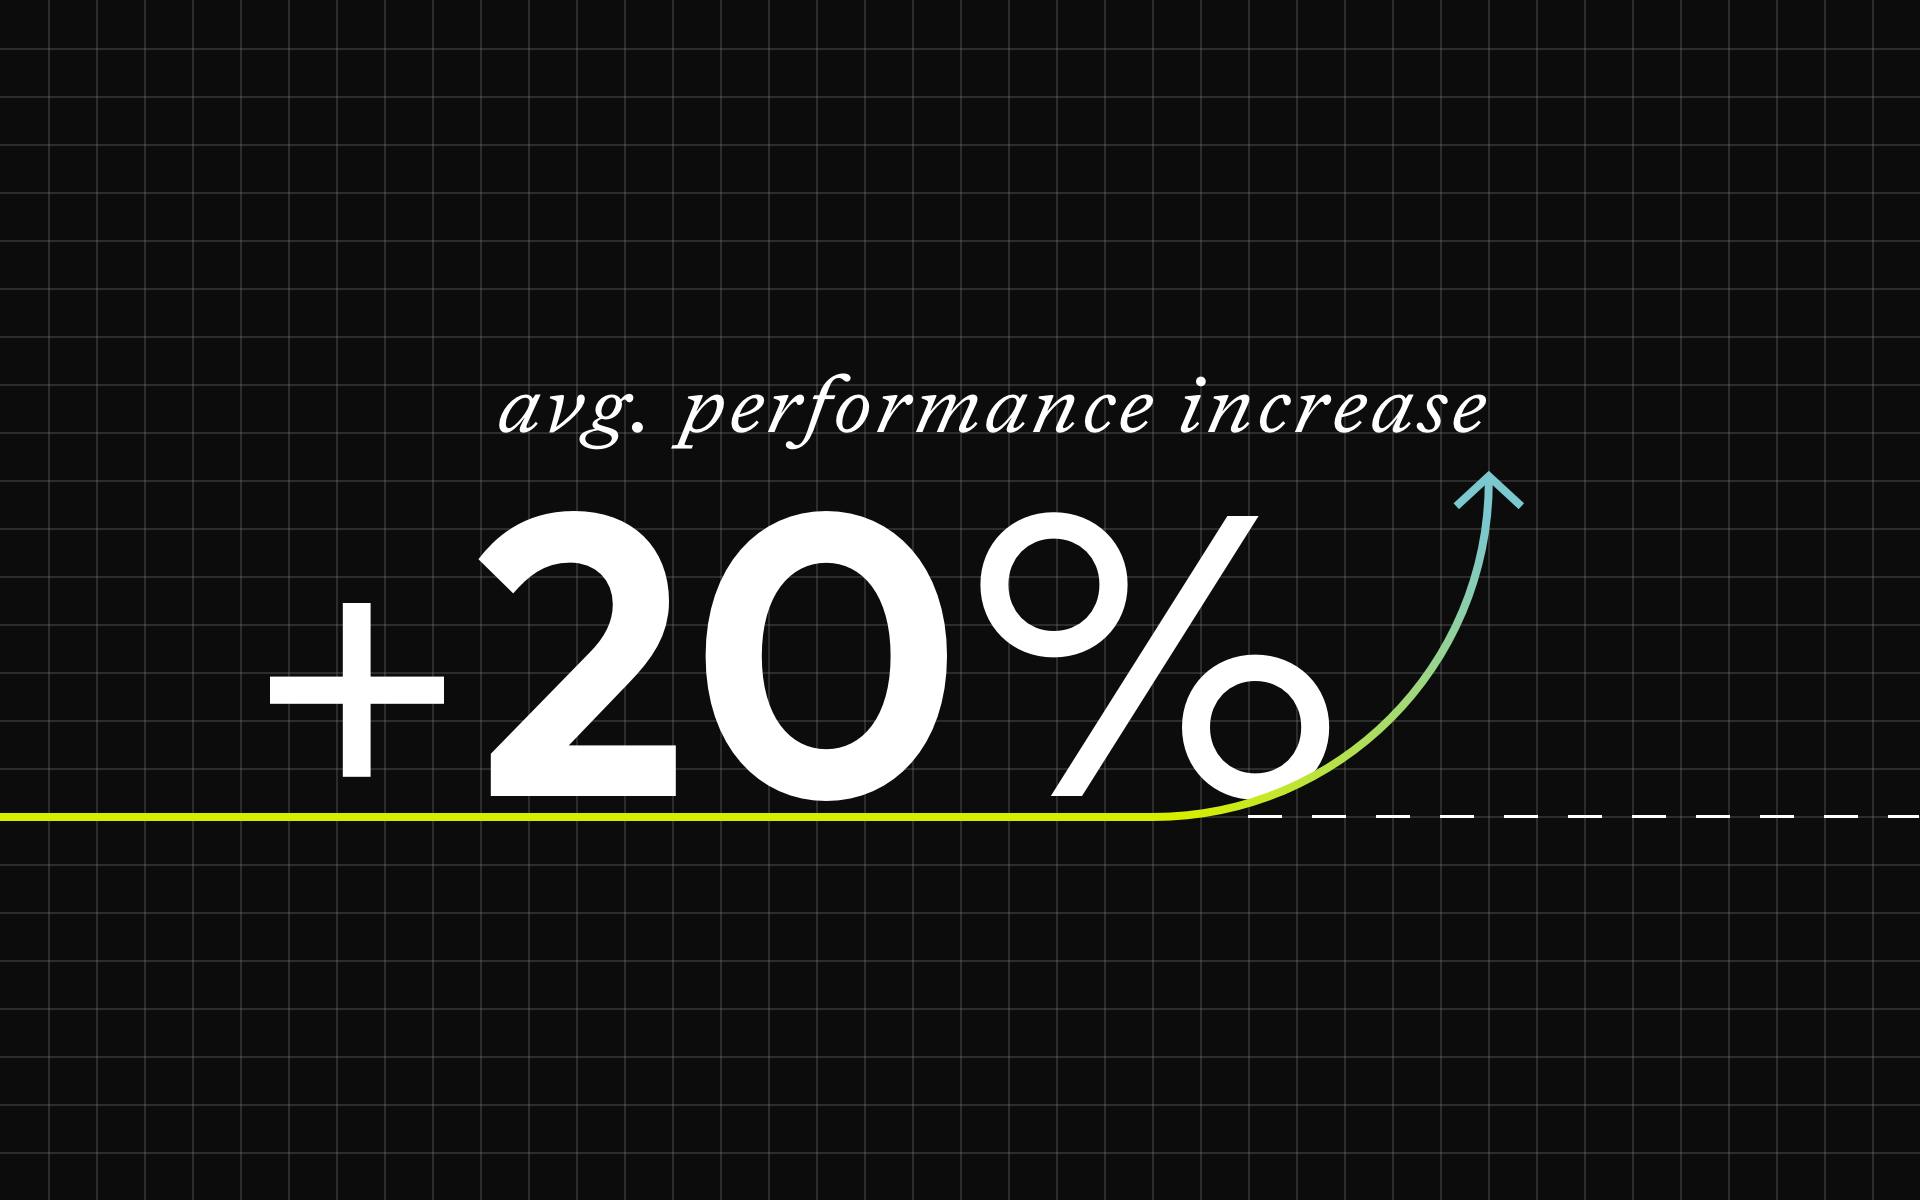 Stylized text: "average performance increase of +20%"